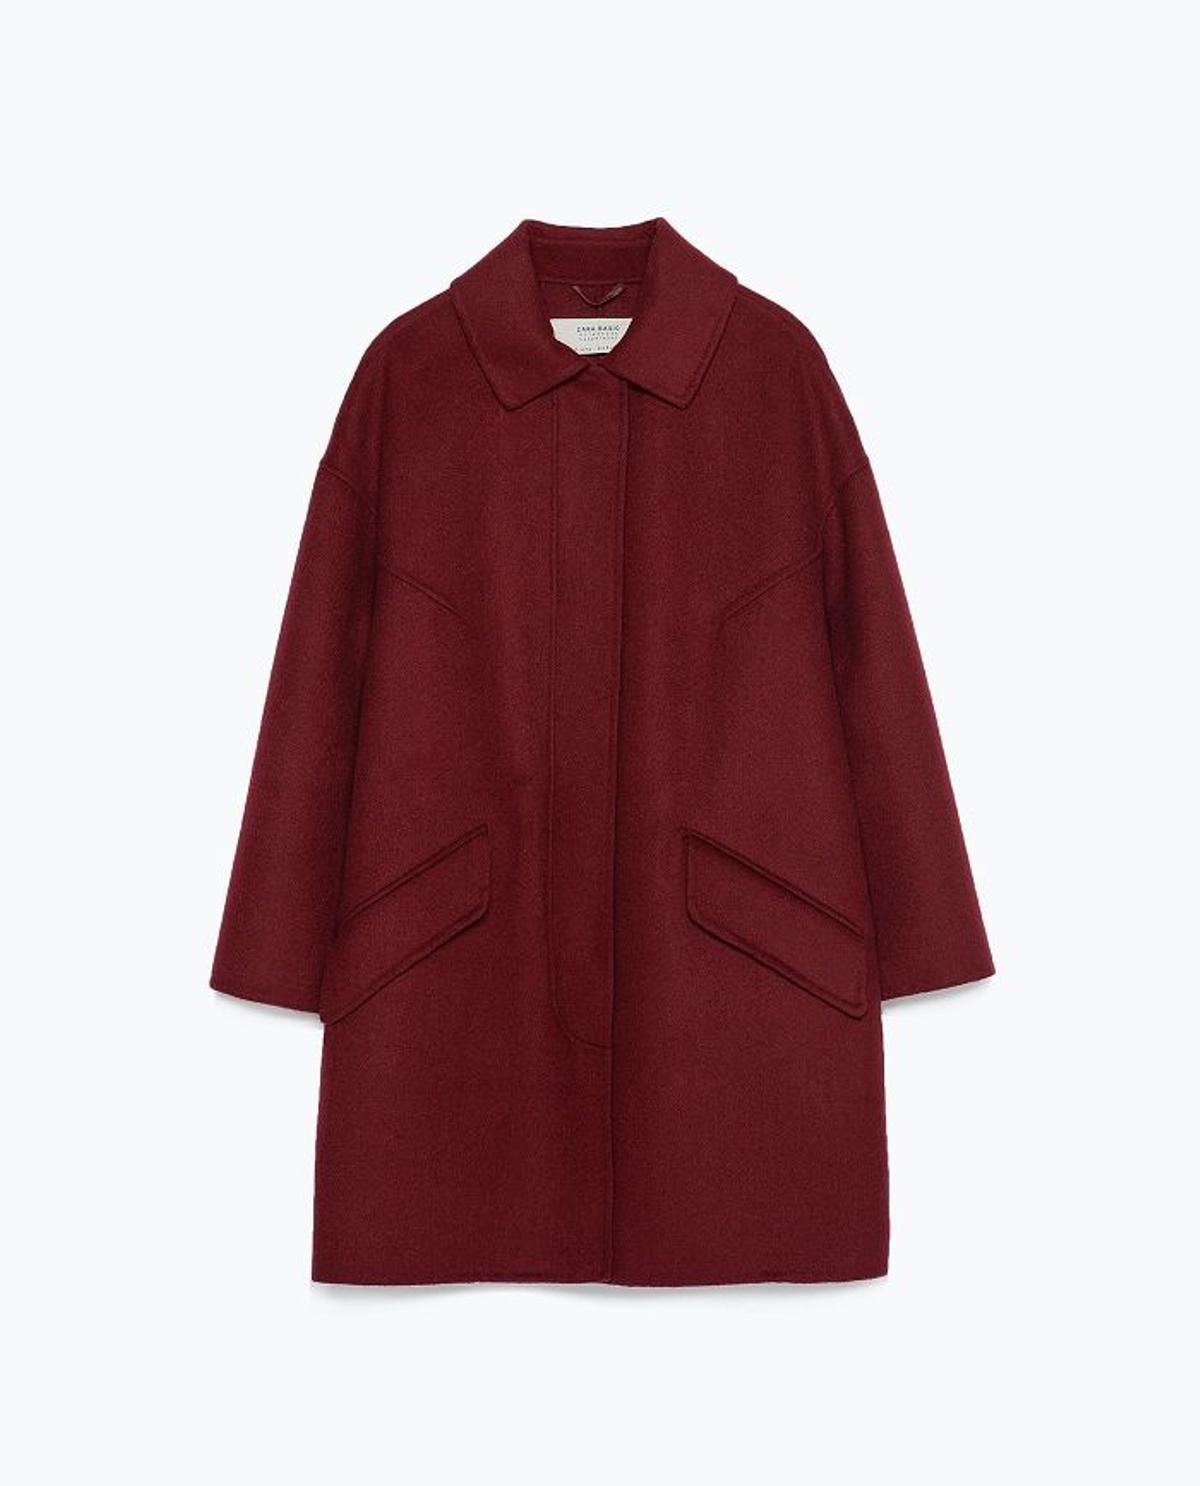 Básicos otoño 2015, abrigo marsala de Zara